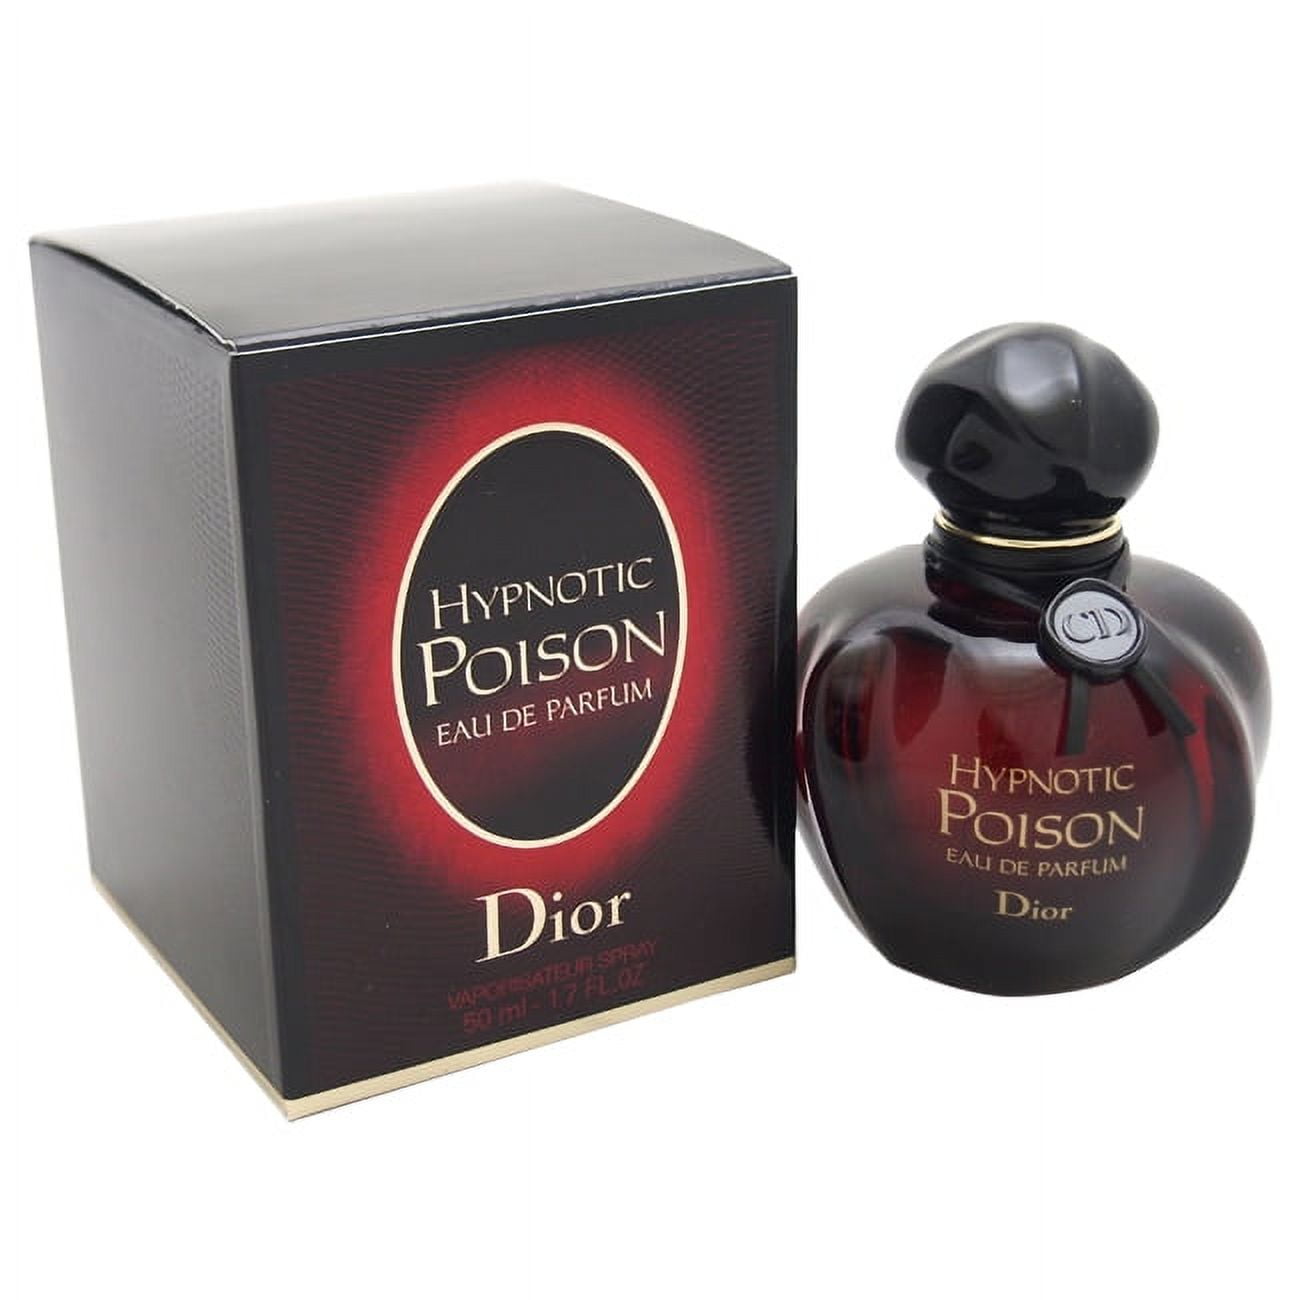 Hypnotic Poison by Christian Dior for Women - 1.7 oz EDP Spray 